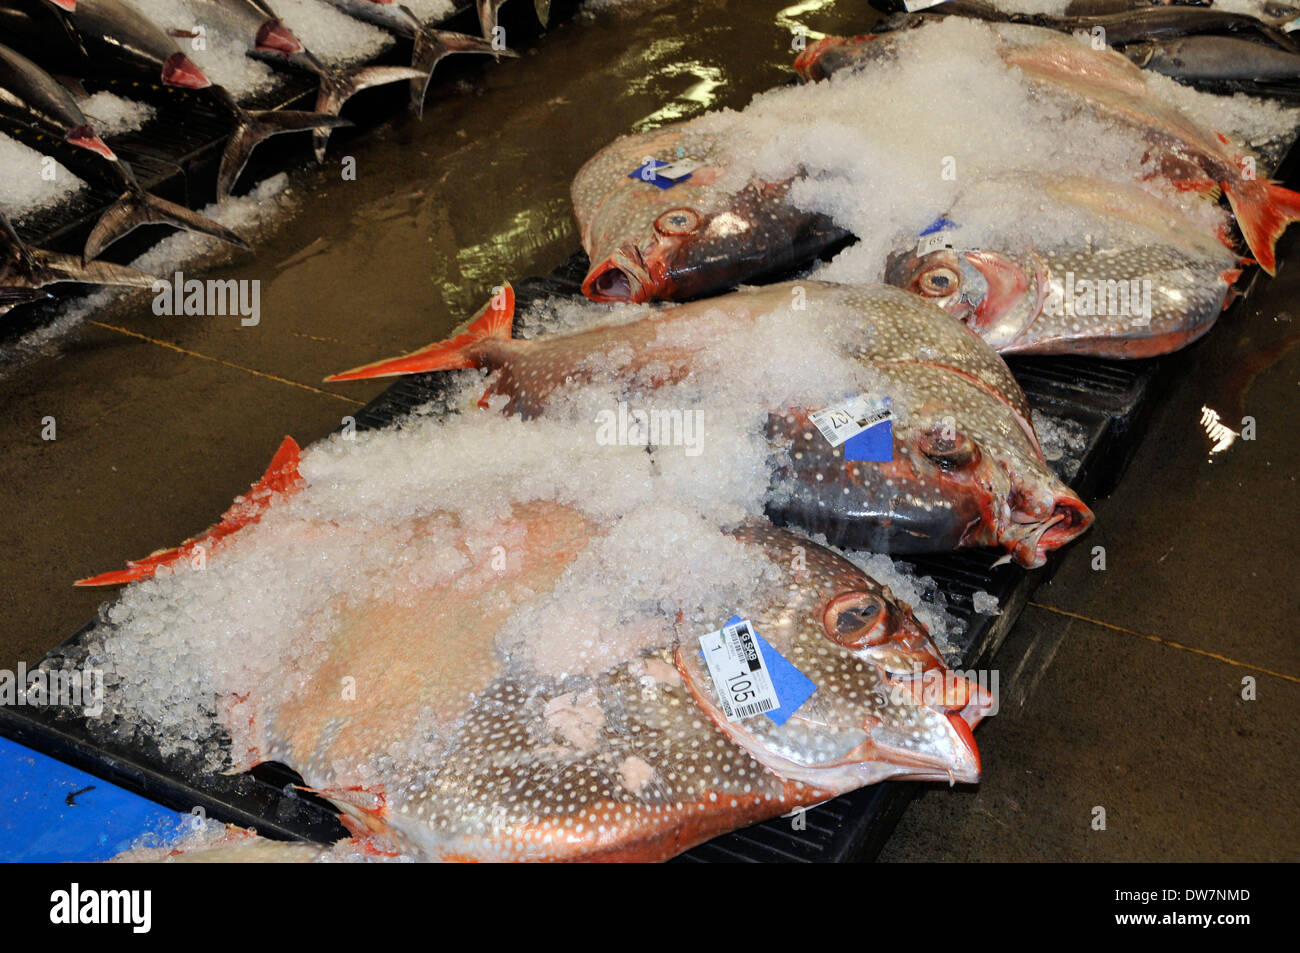 Dead moonfish, sunfish or opah, Lampris regius, wait on ice for auction at the Honolulu fish market, Oahu, Hawaii, USA Stock Photo